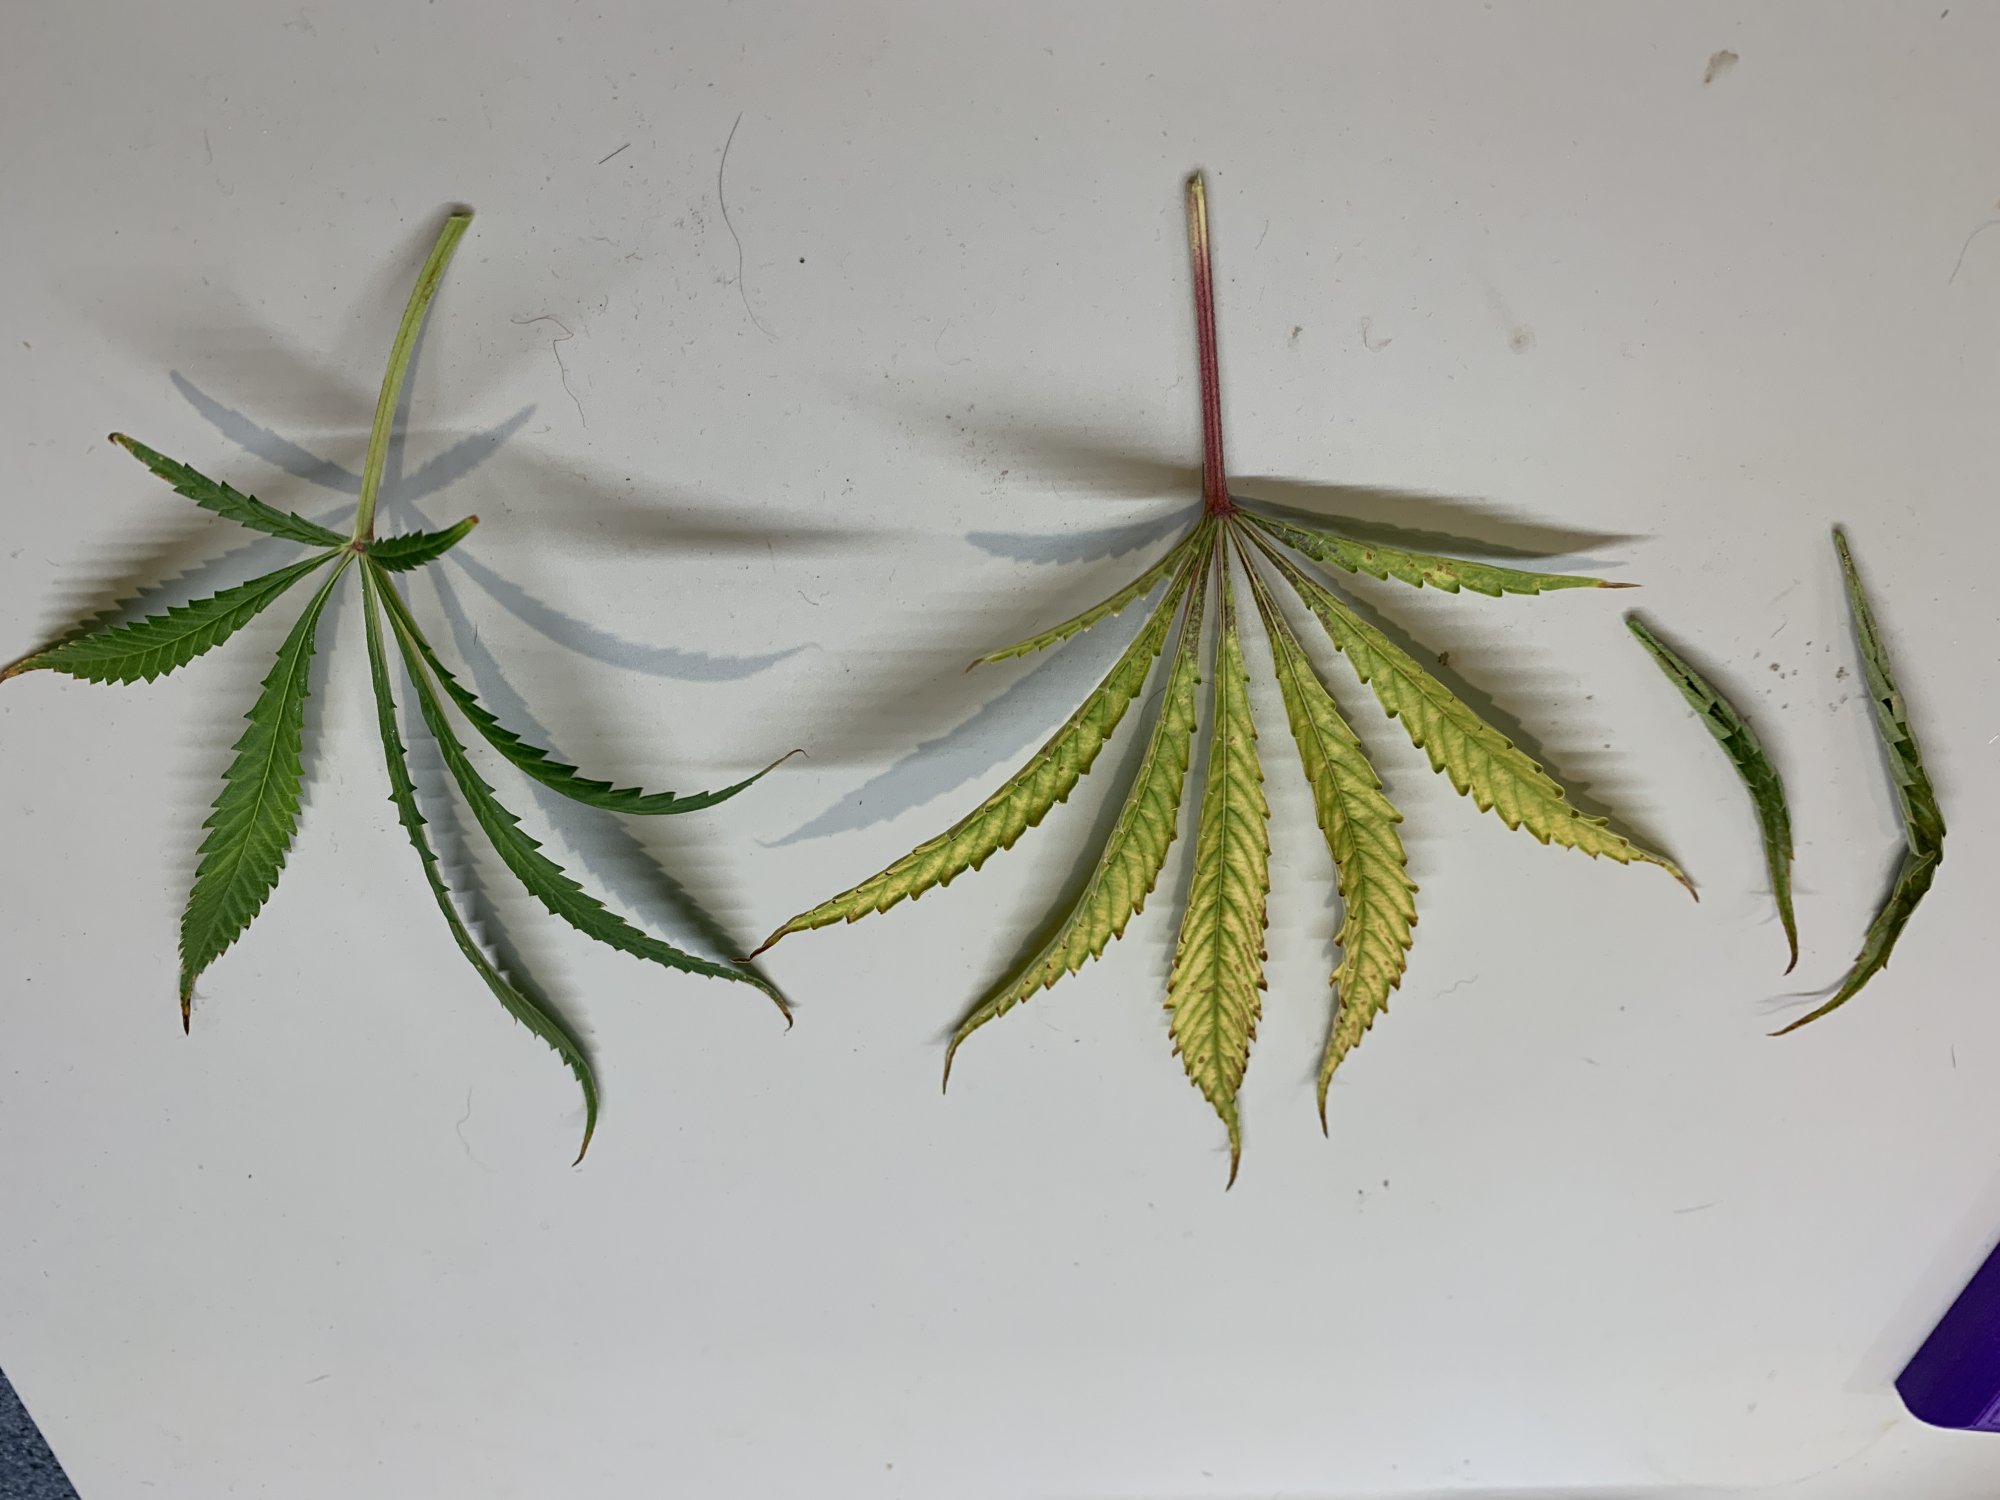 Day 6 Leaf comparison